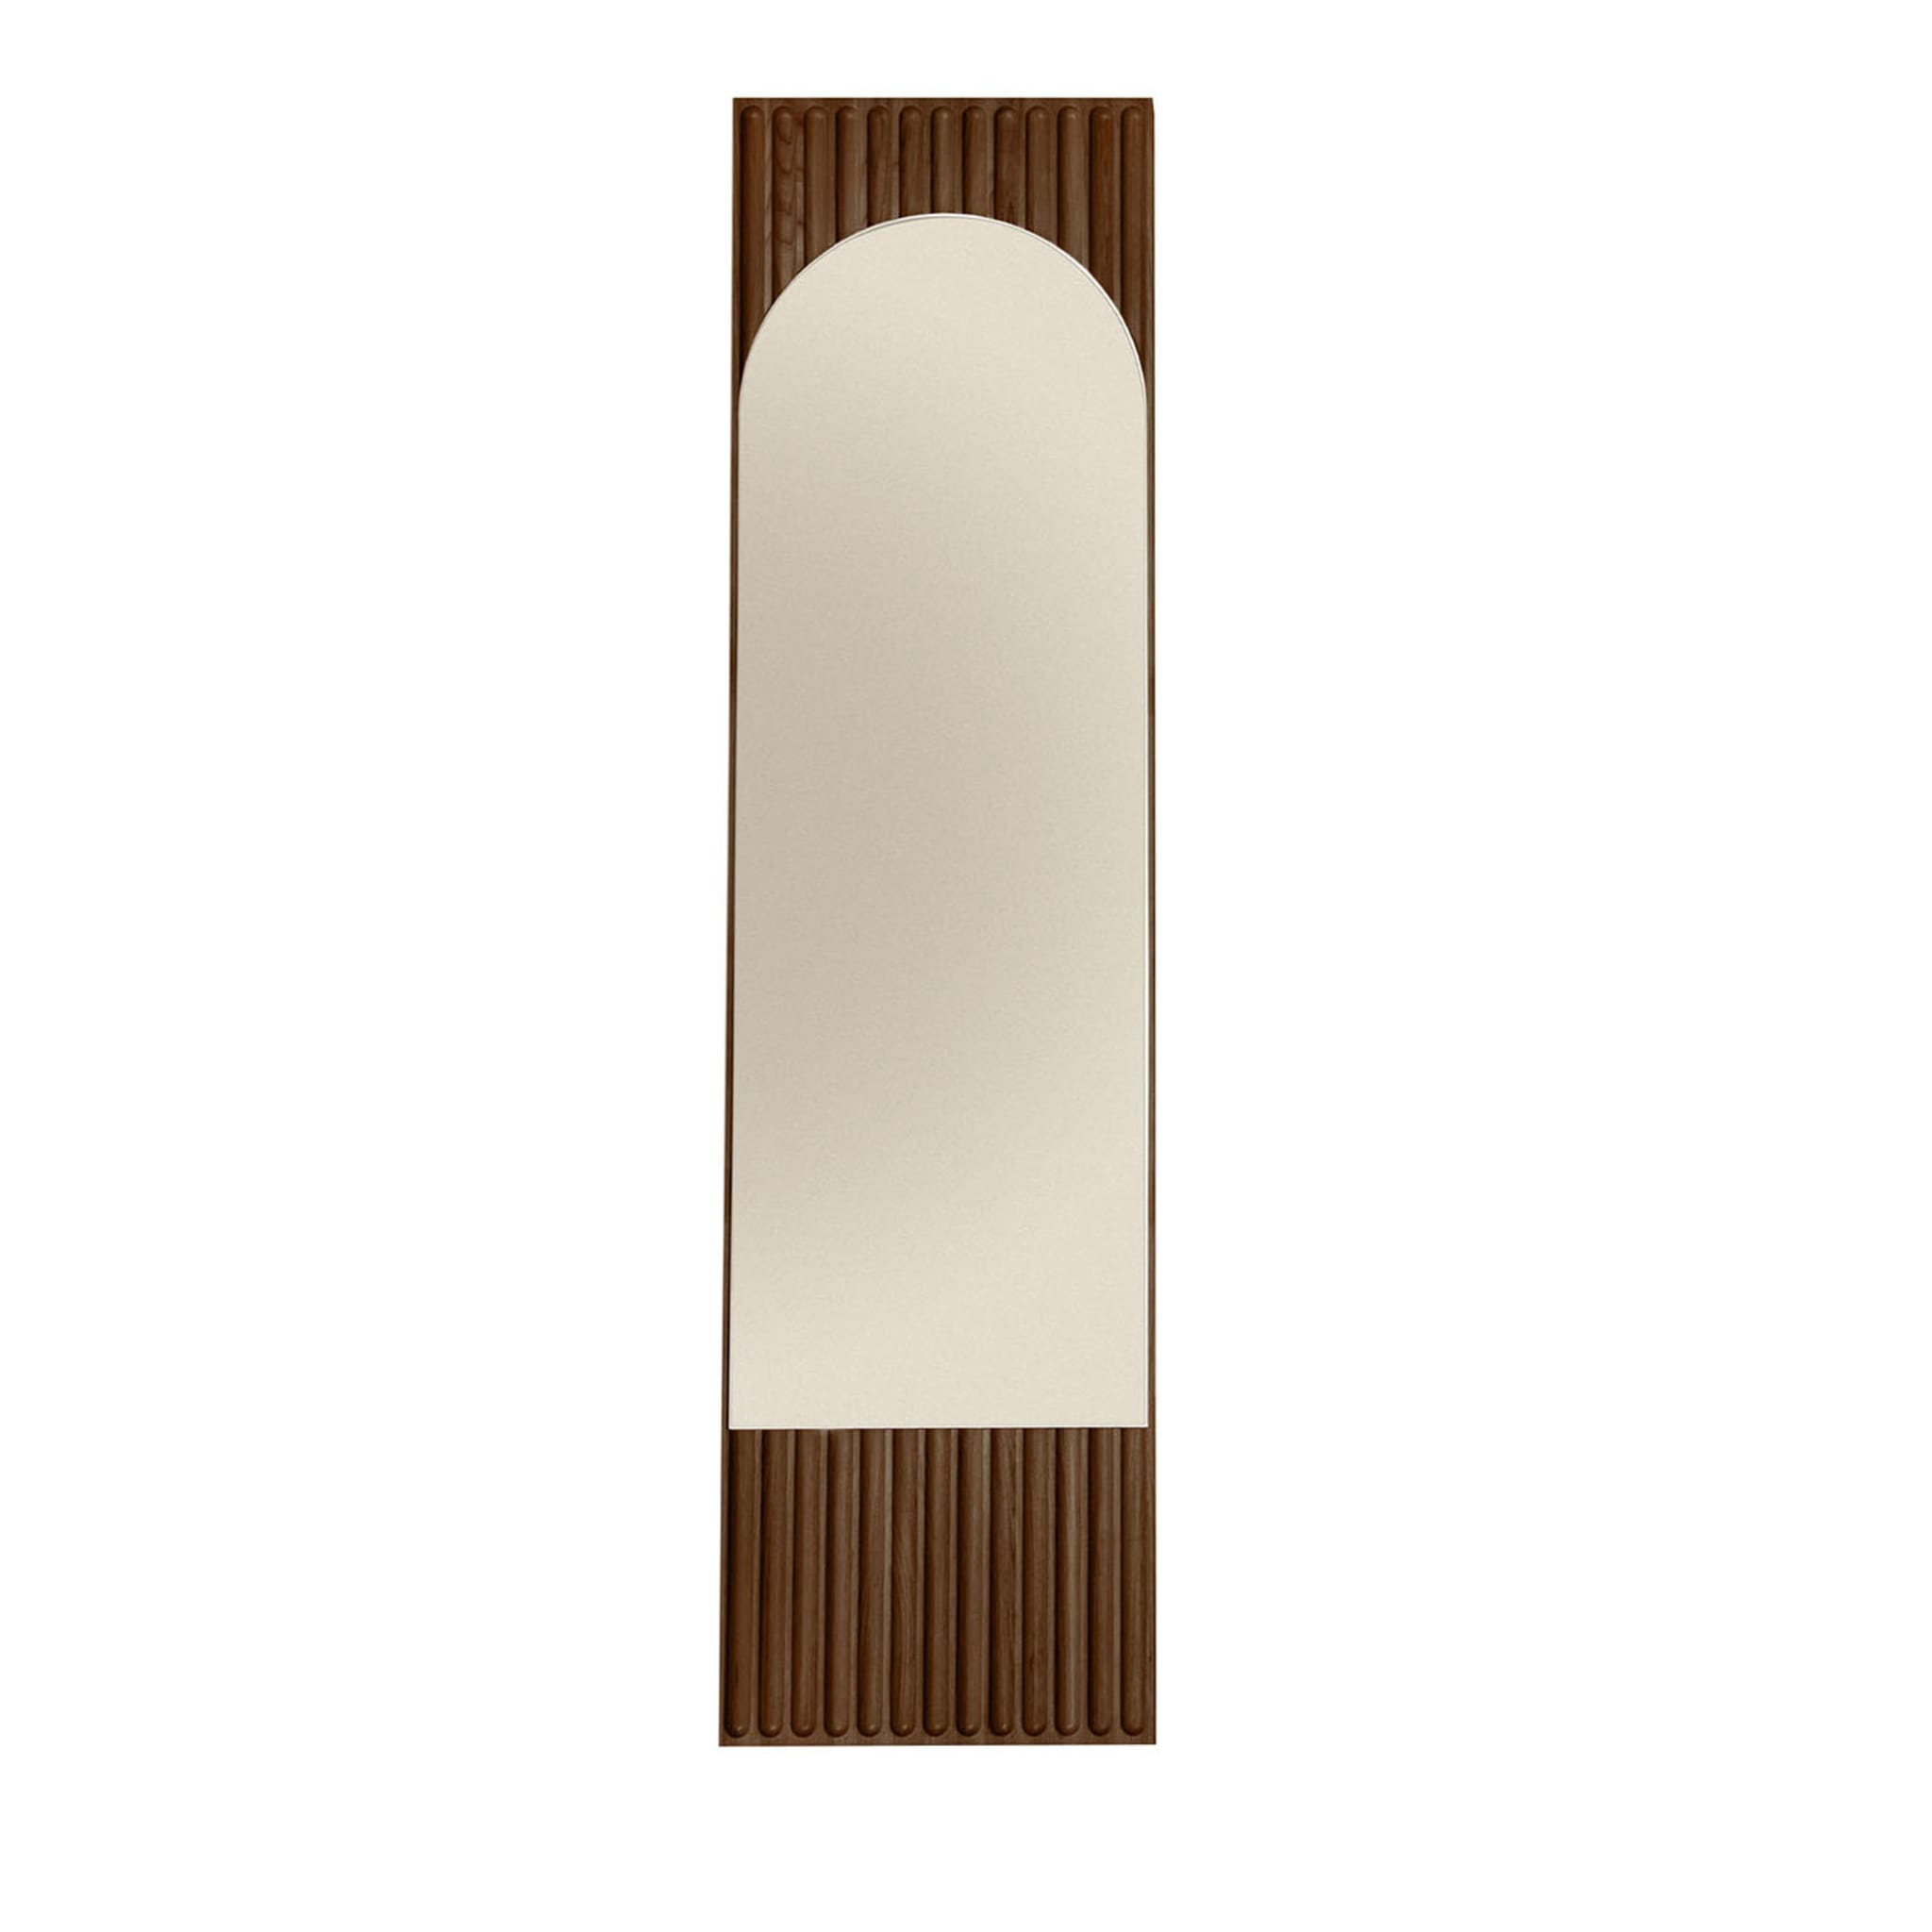 Tutto Sesto Miroir rectangulaire en frêne brun - Vue principale